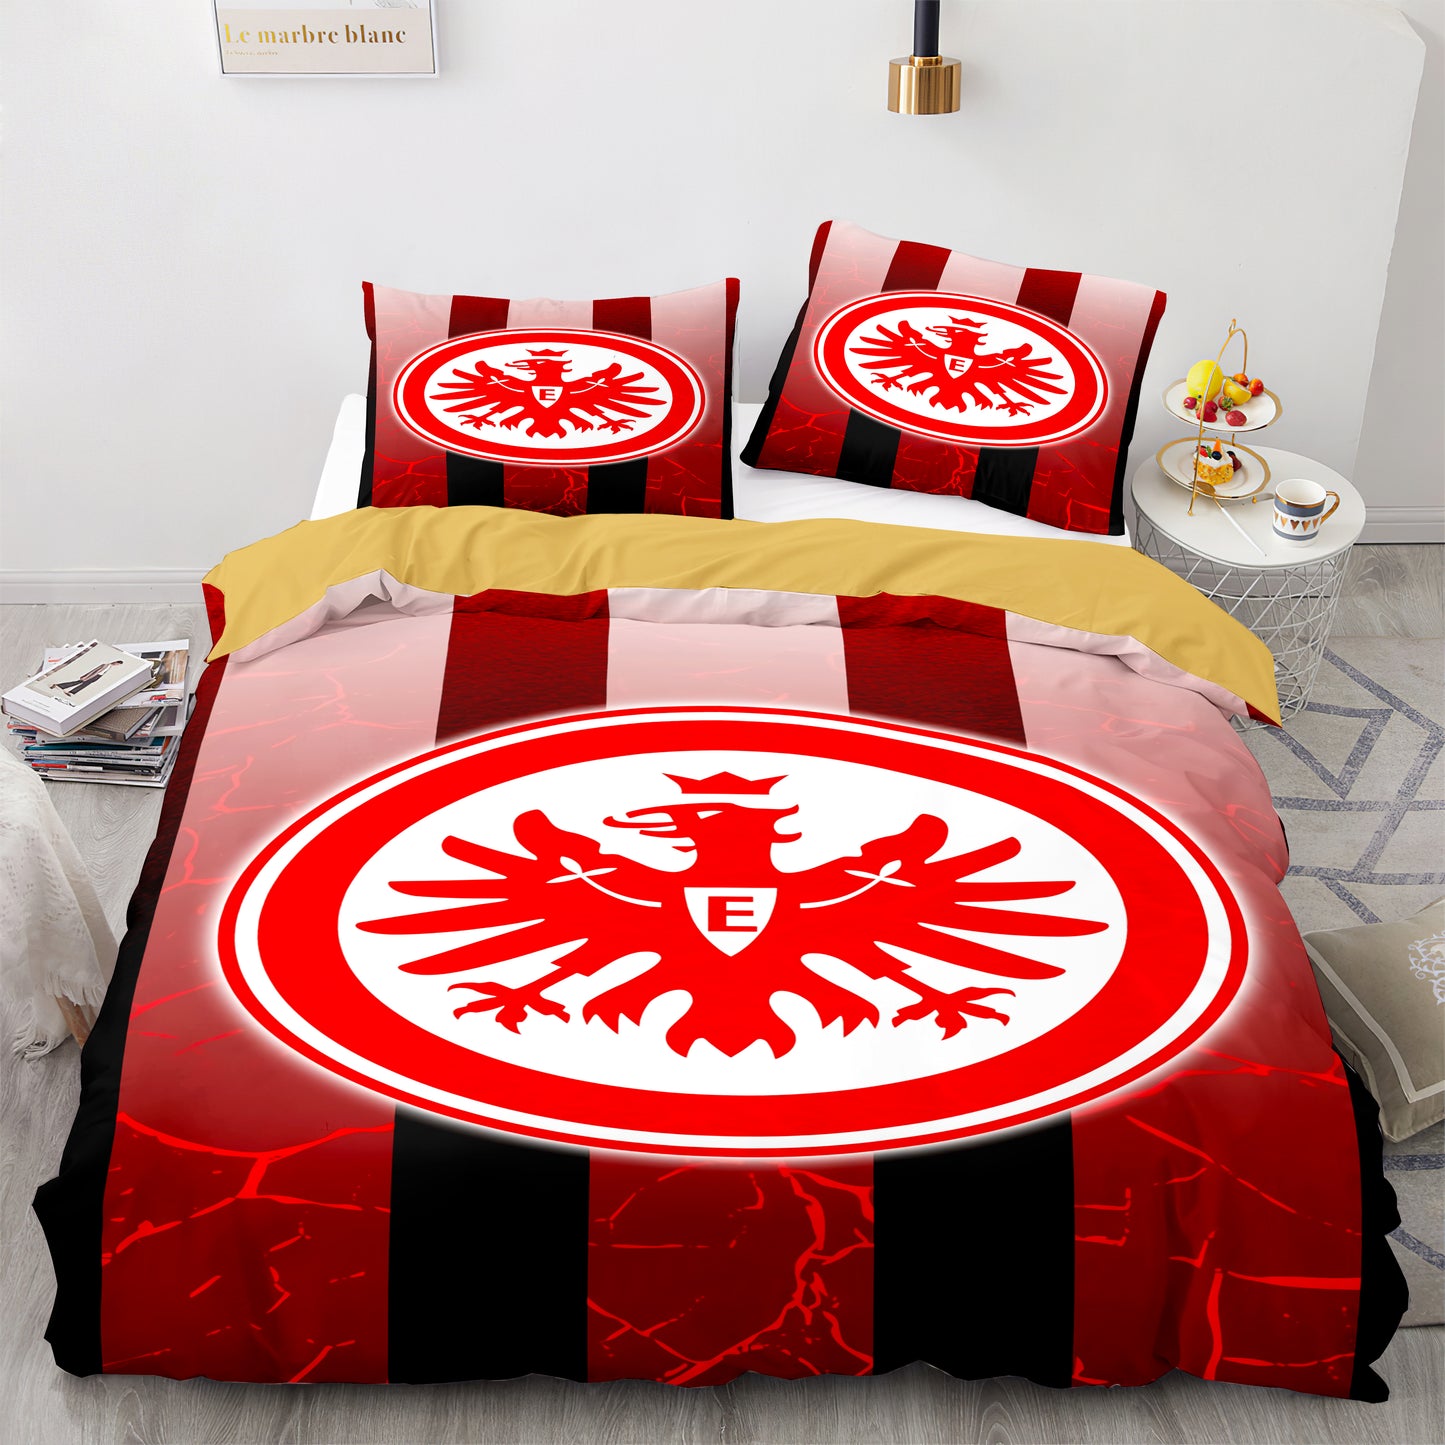 Eintracht Frankfurt Comforter And Flatsheet Set